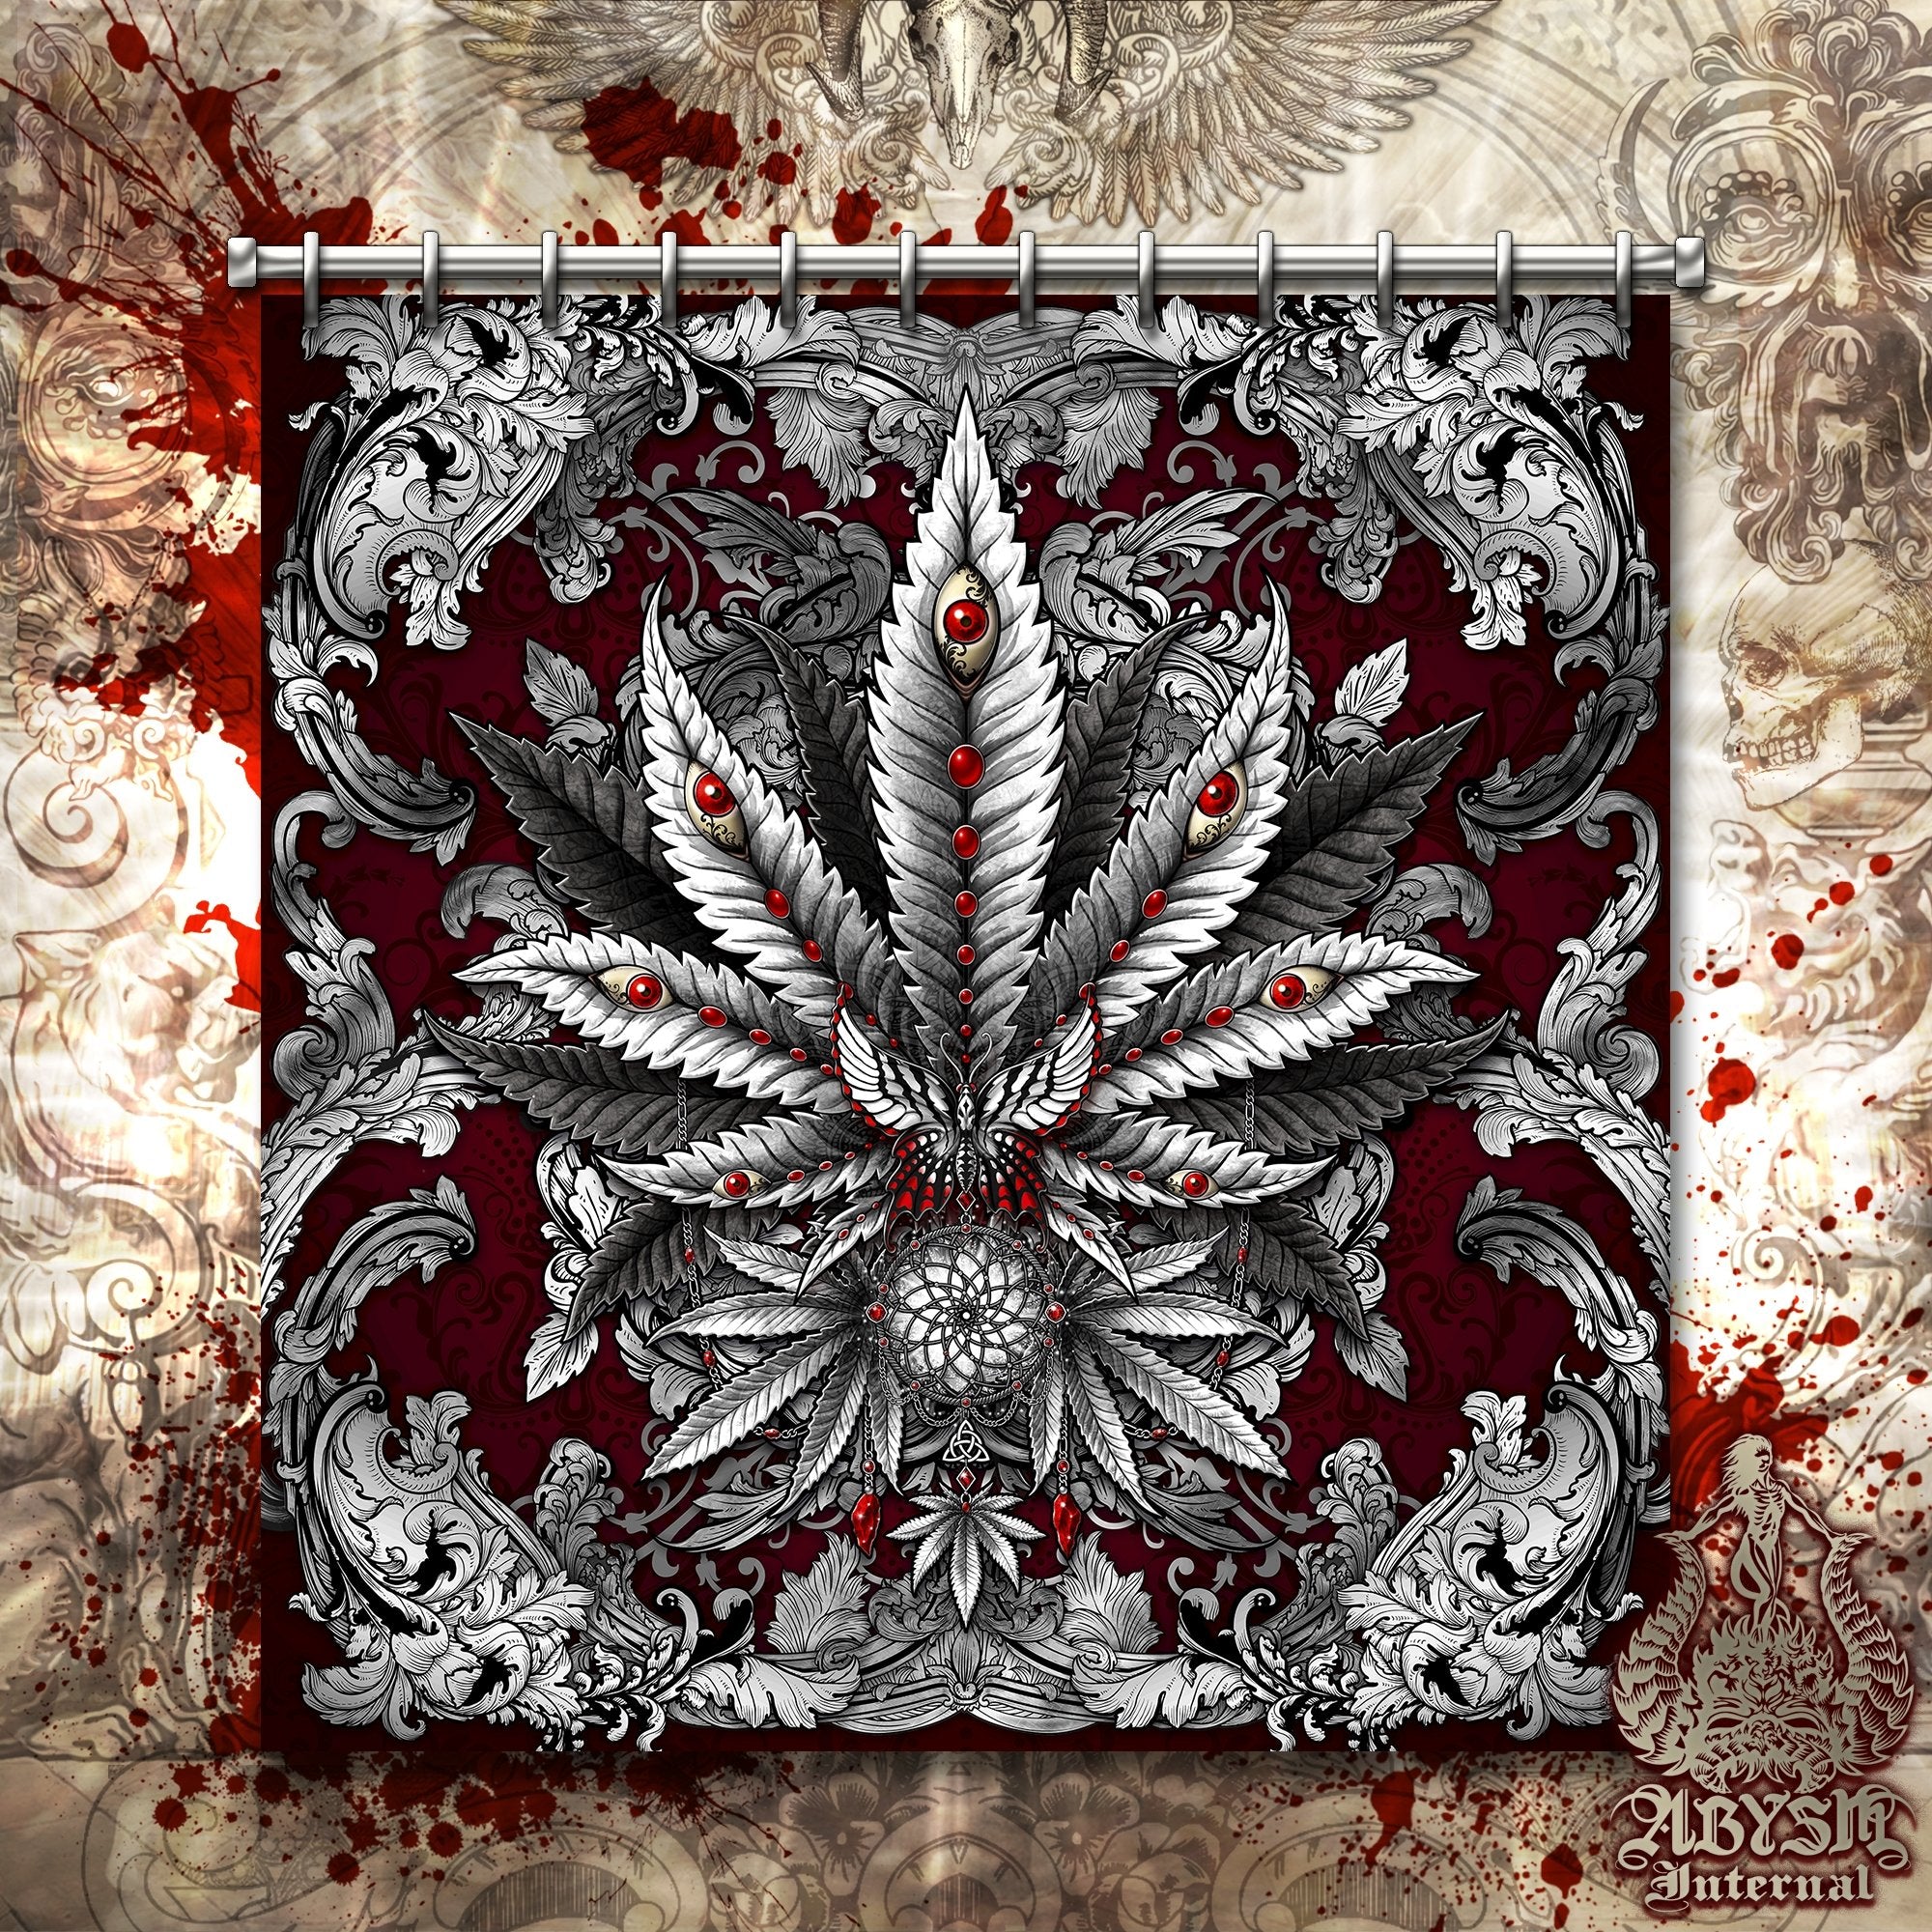 Weed Shower Curtain, Hippie Bathroom Decor, Indie Cannabis Print, 420 Home Art - Marijuana, Silver - Abysm Internal